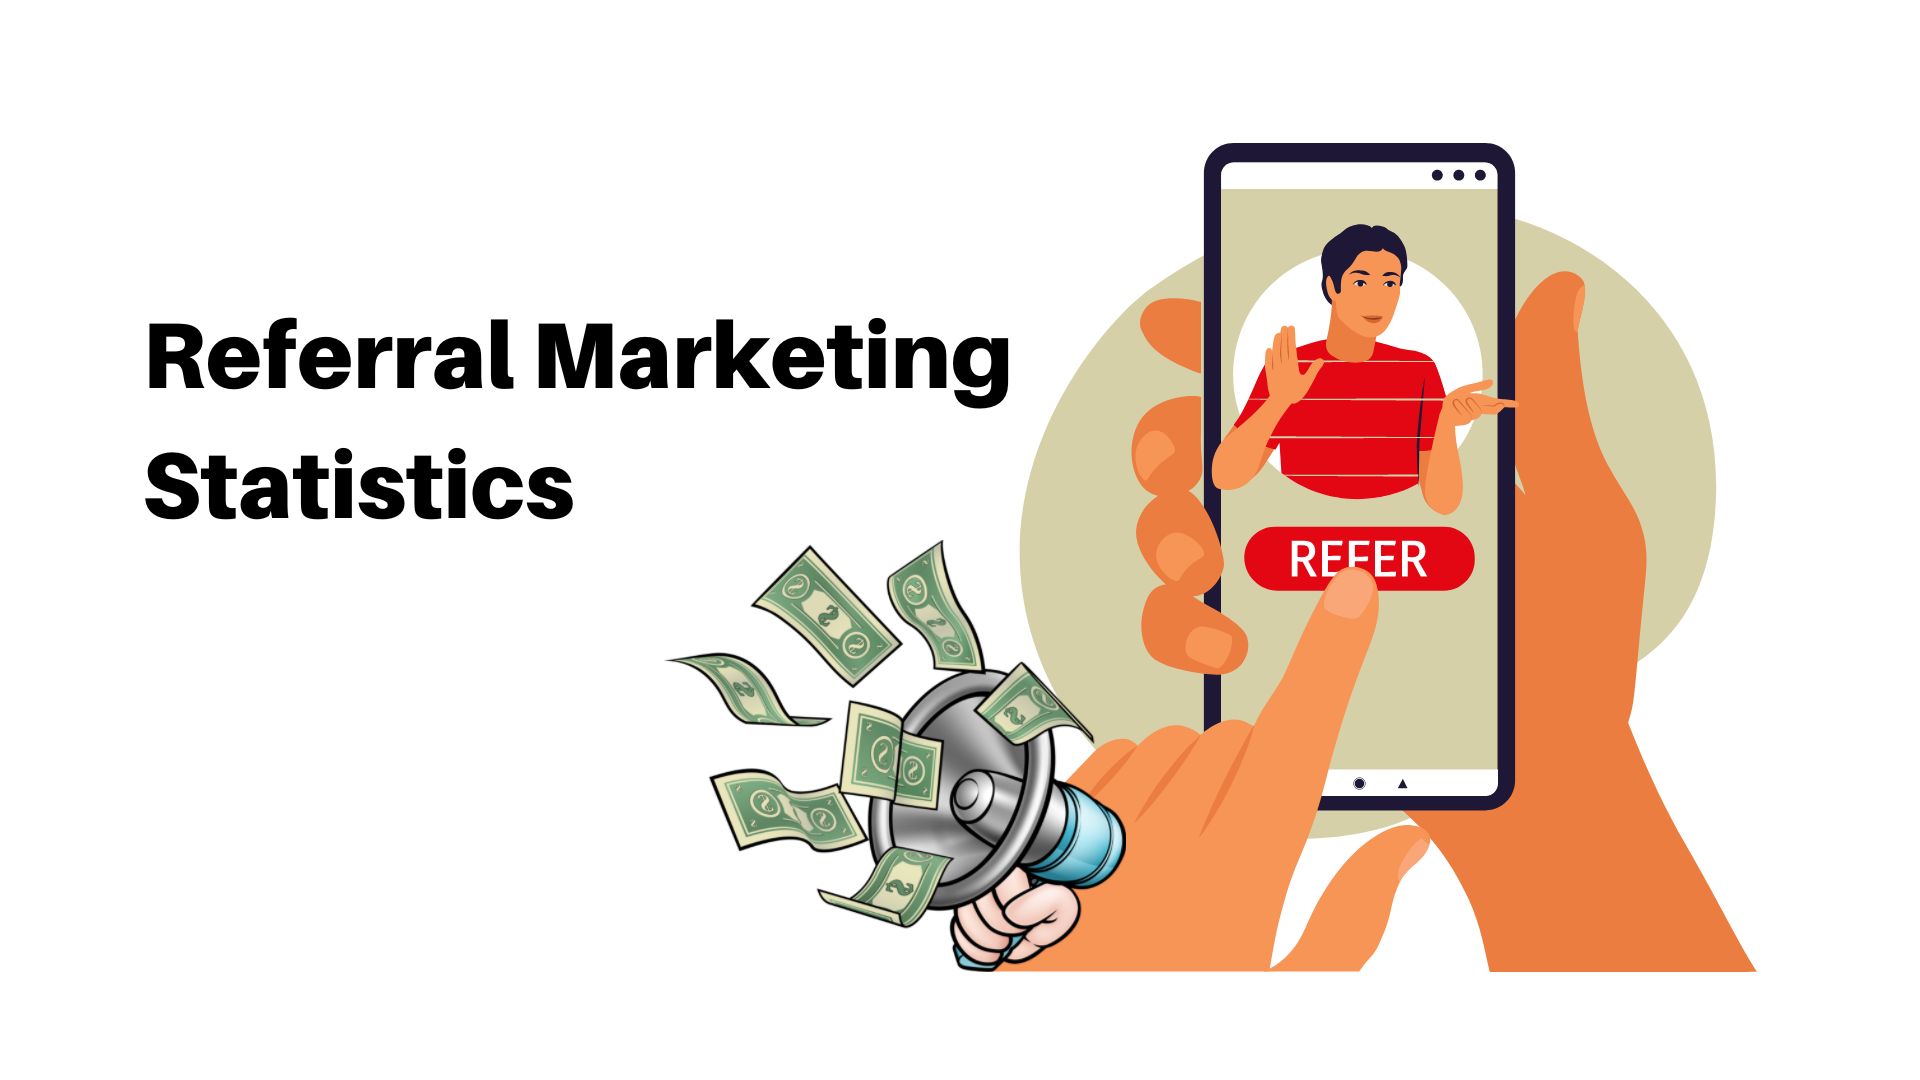 Referral Marketing Statistics By Consumer Behavior, Incentives Offered, Demographics, Referral Gap, Reward Type and Popular Method